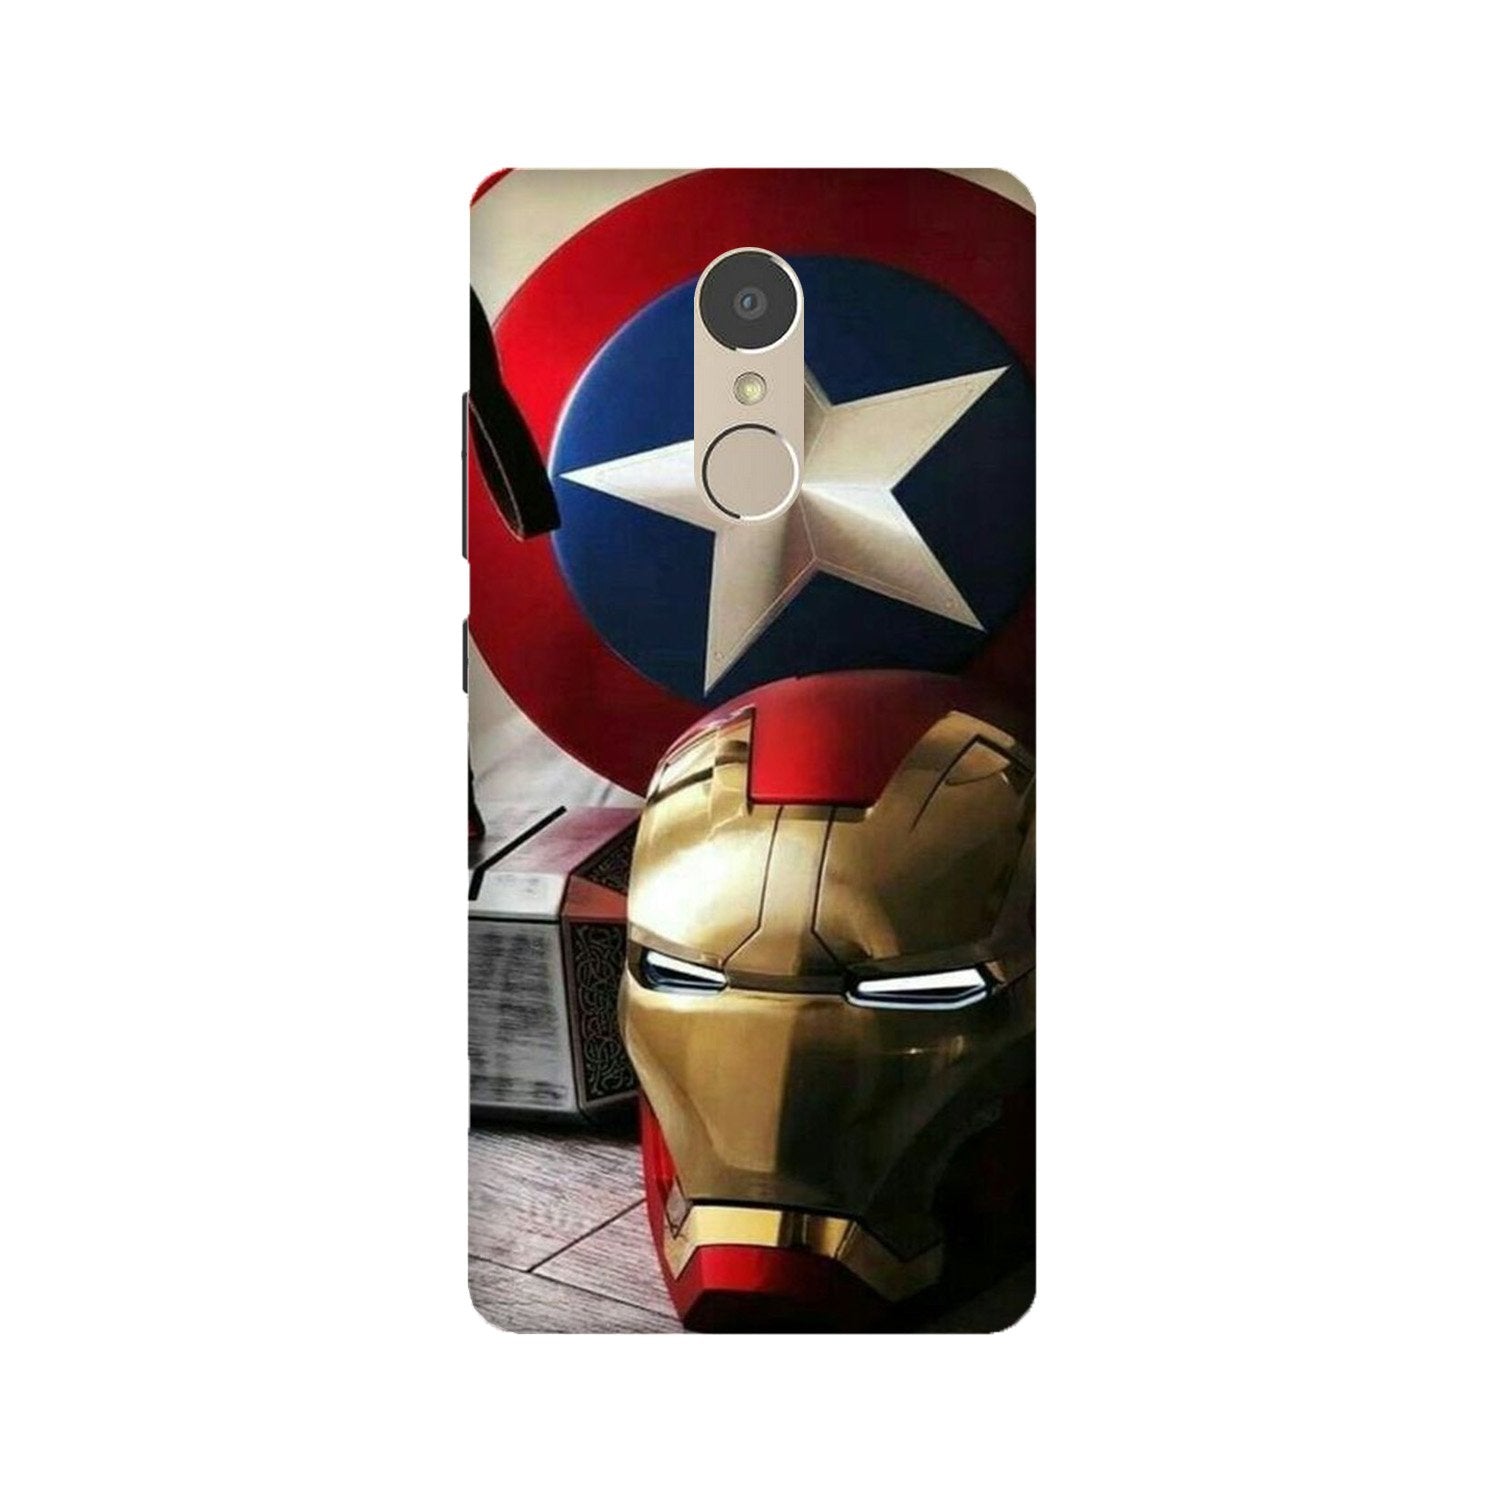 Ironman Captain America Case for Lenovo K6 Note (Design No. 254)